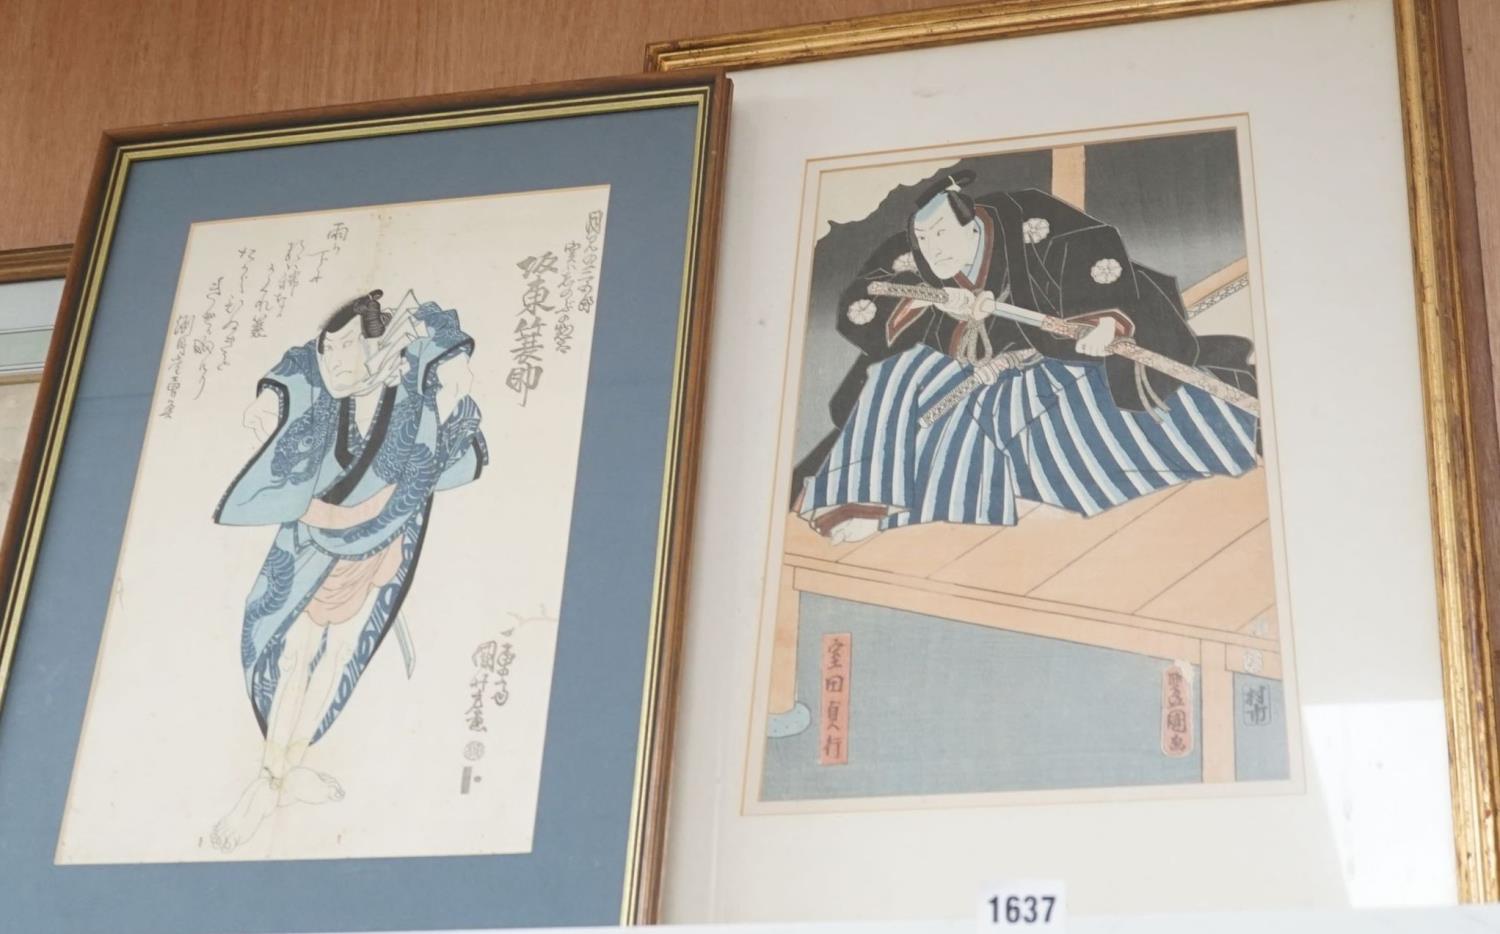 Kunisada, woodblock print, Samurai on a jetty, 33 x 23cm and another print of a Samurai, 36 x 23cm